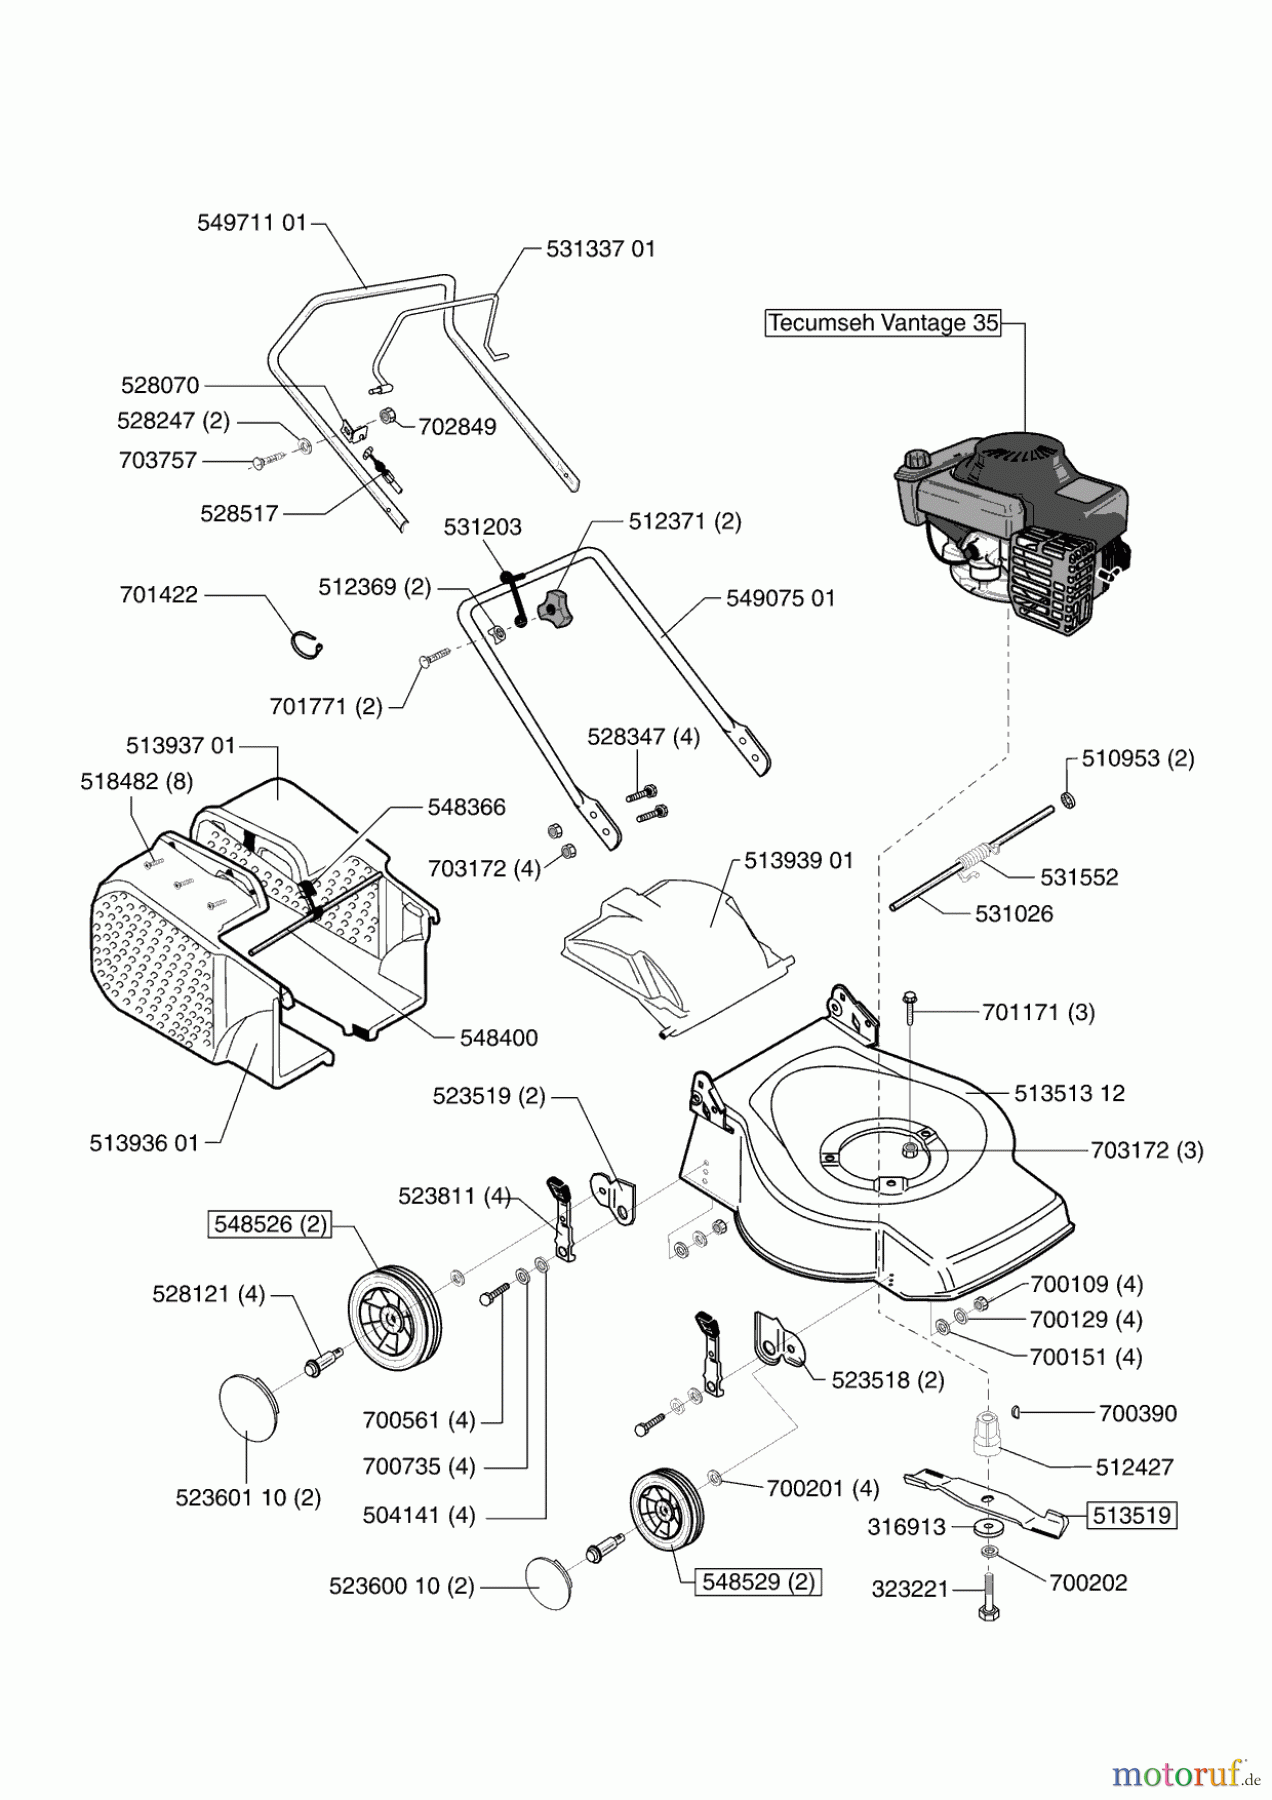  AL-KO Gartentechnik Benzinrasenmäher 40 B  ab 10/2001 Seite 1